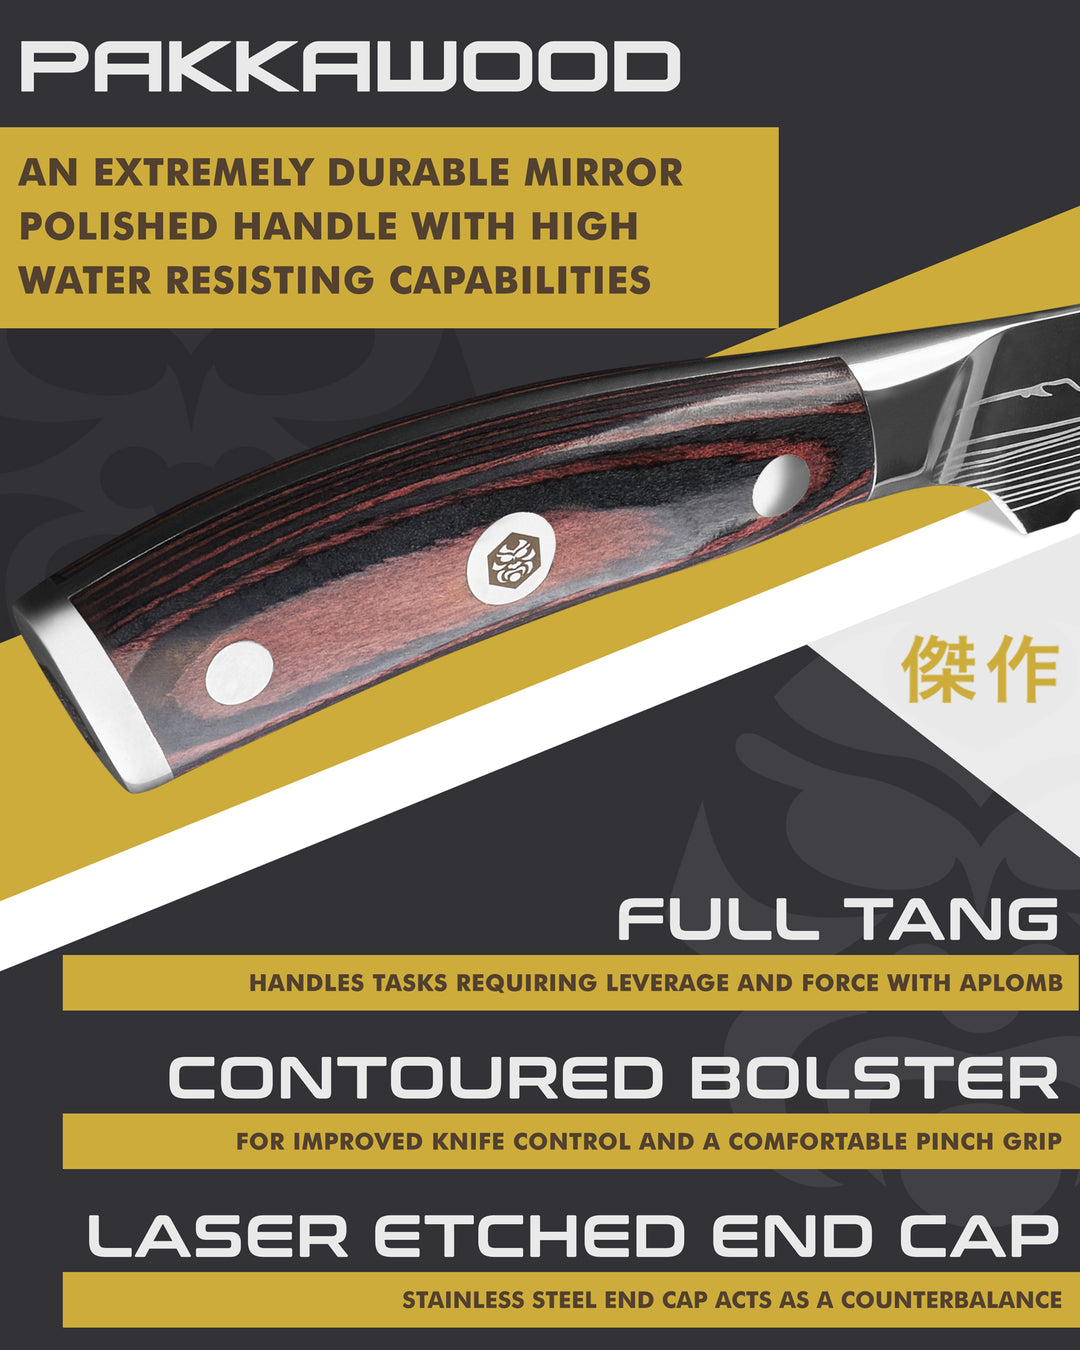 Kessaku Samurai Steak Knife handle features: Pakkawood handle, full tang, contoured bolster, laser etched end cap